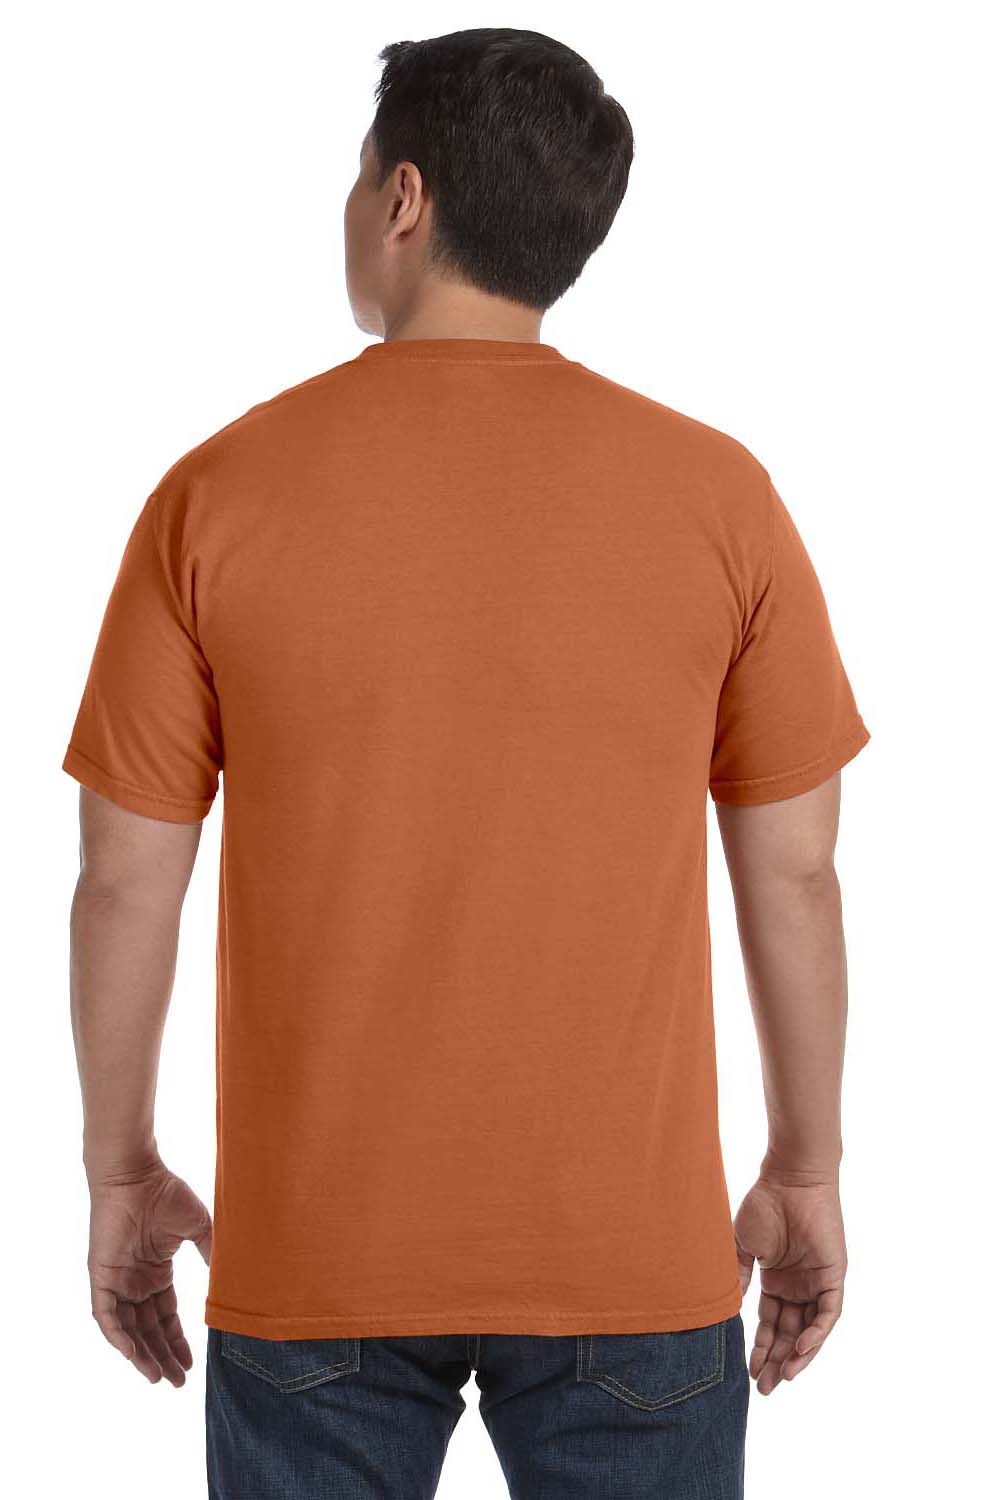 Comfort Colors C1717 Mens Short Sleeve Crewneck T-Shirt Yam Orange Back